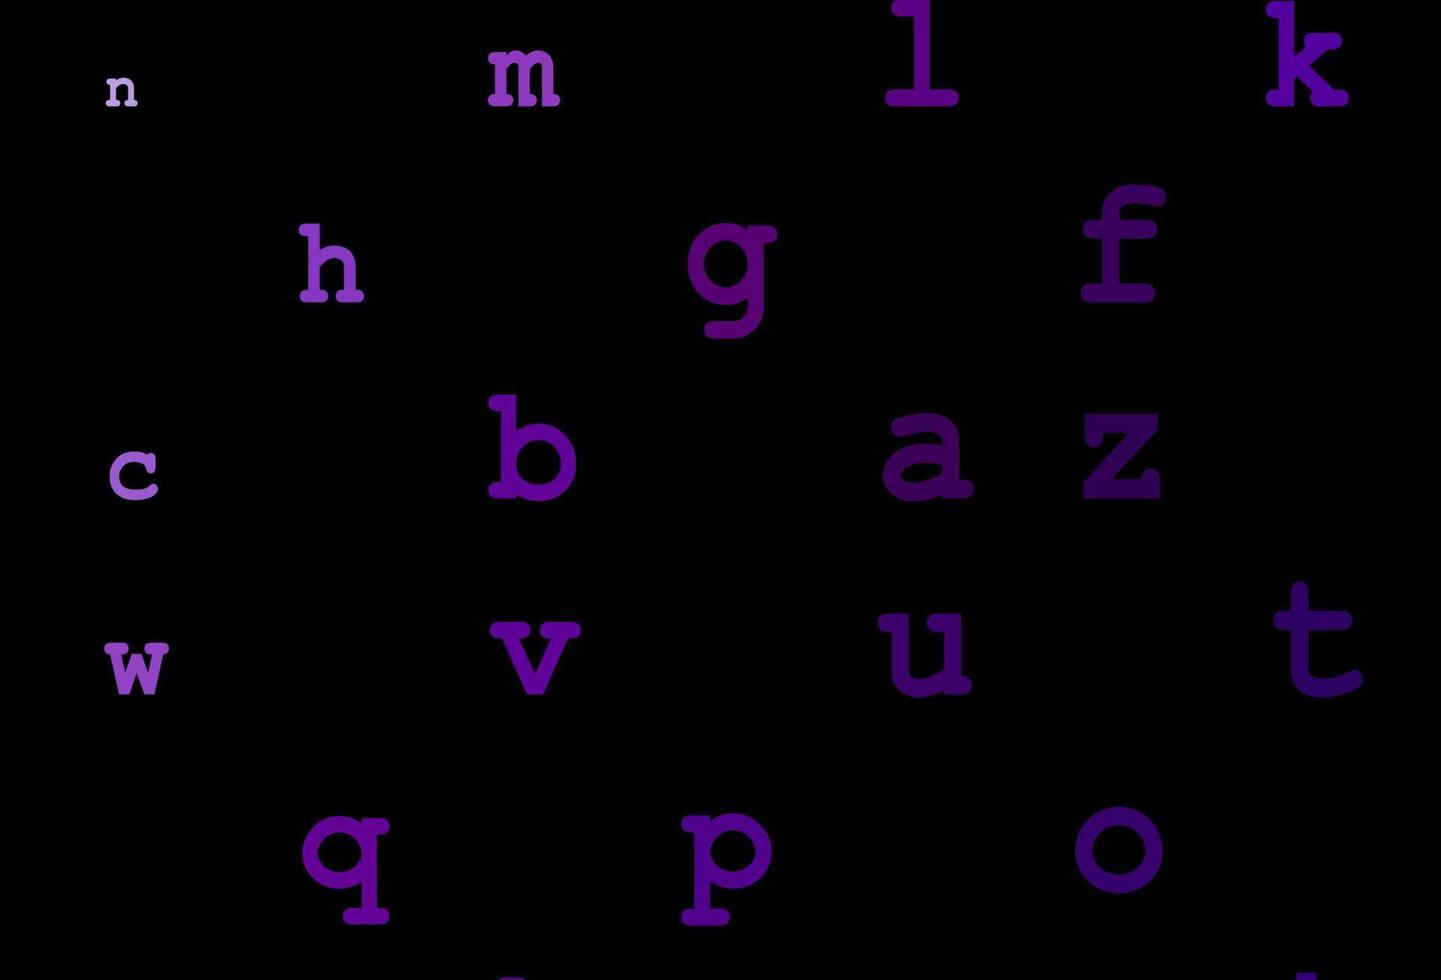 Dark purple vector layout with latin alphabet.